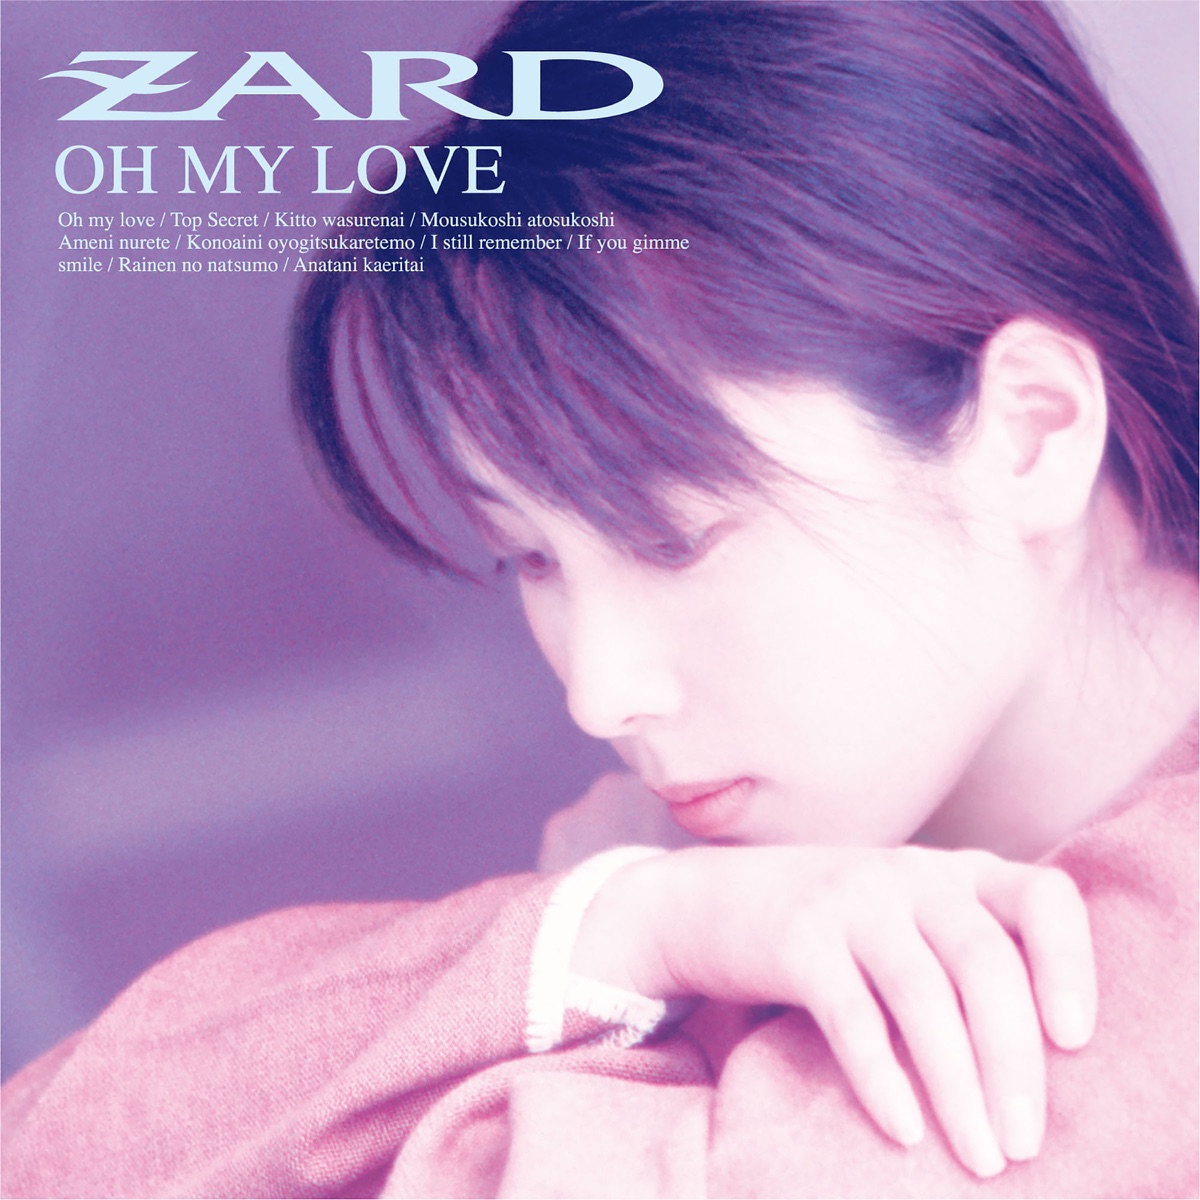 ZARD BLEND～SUNu0026STONE～ - ZARDのアルバム - Apple Music